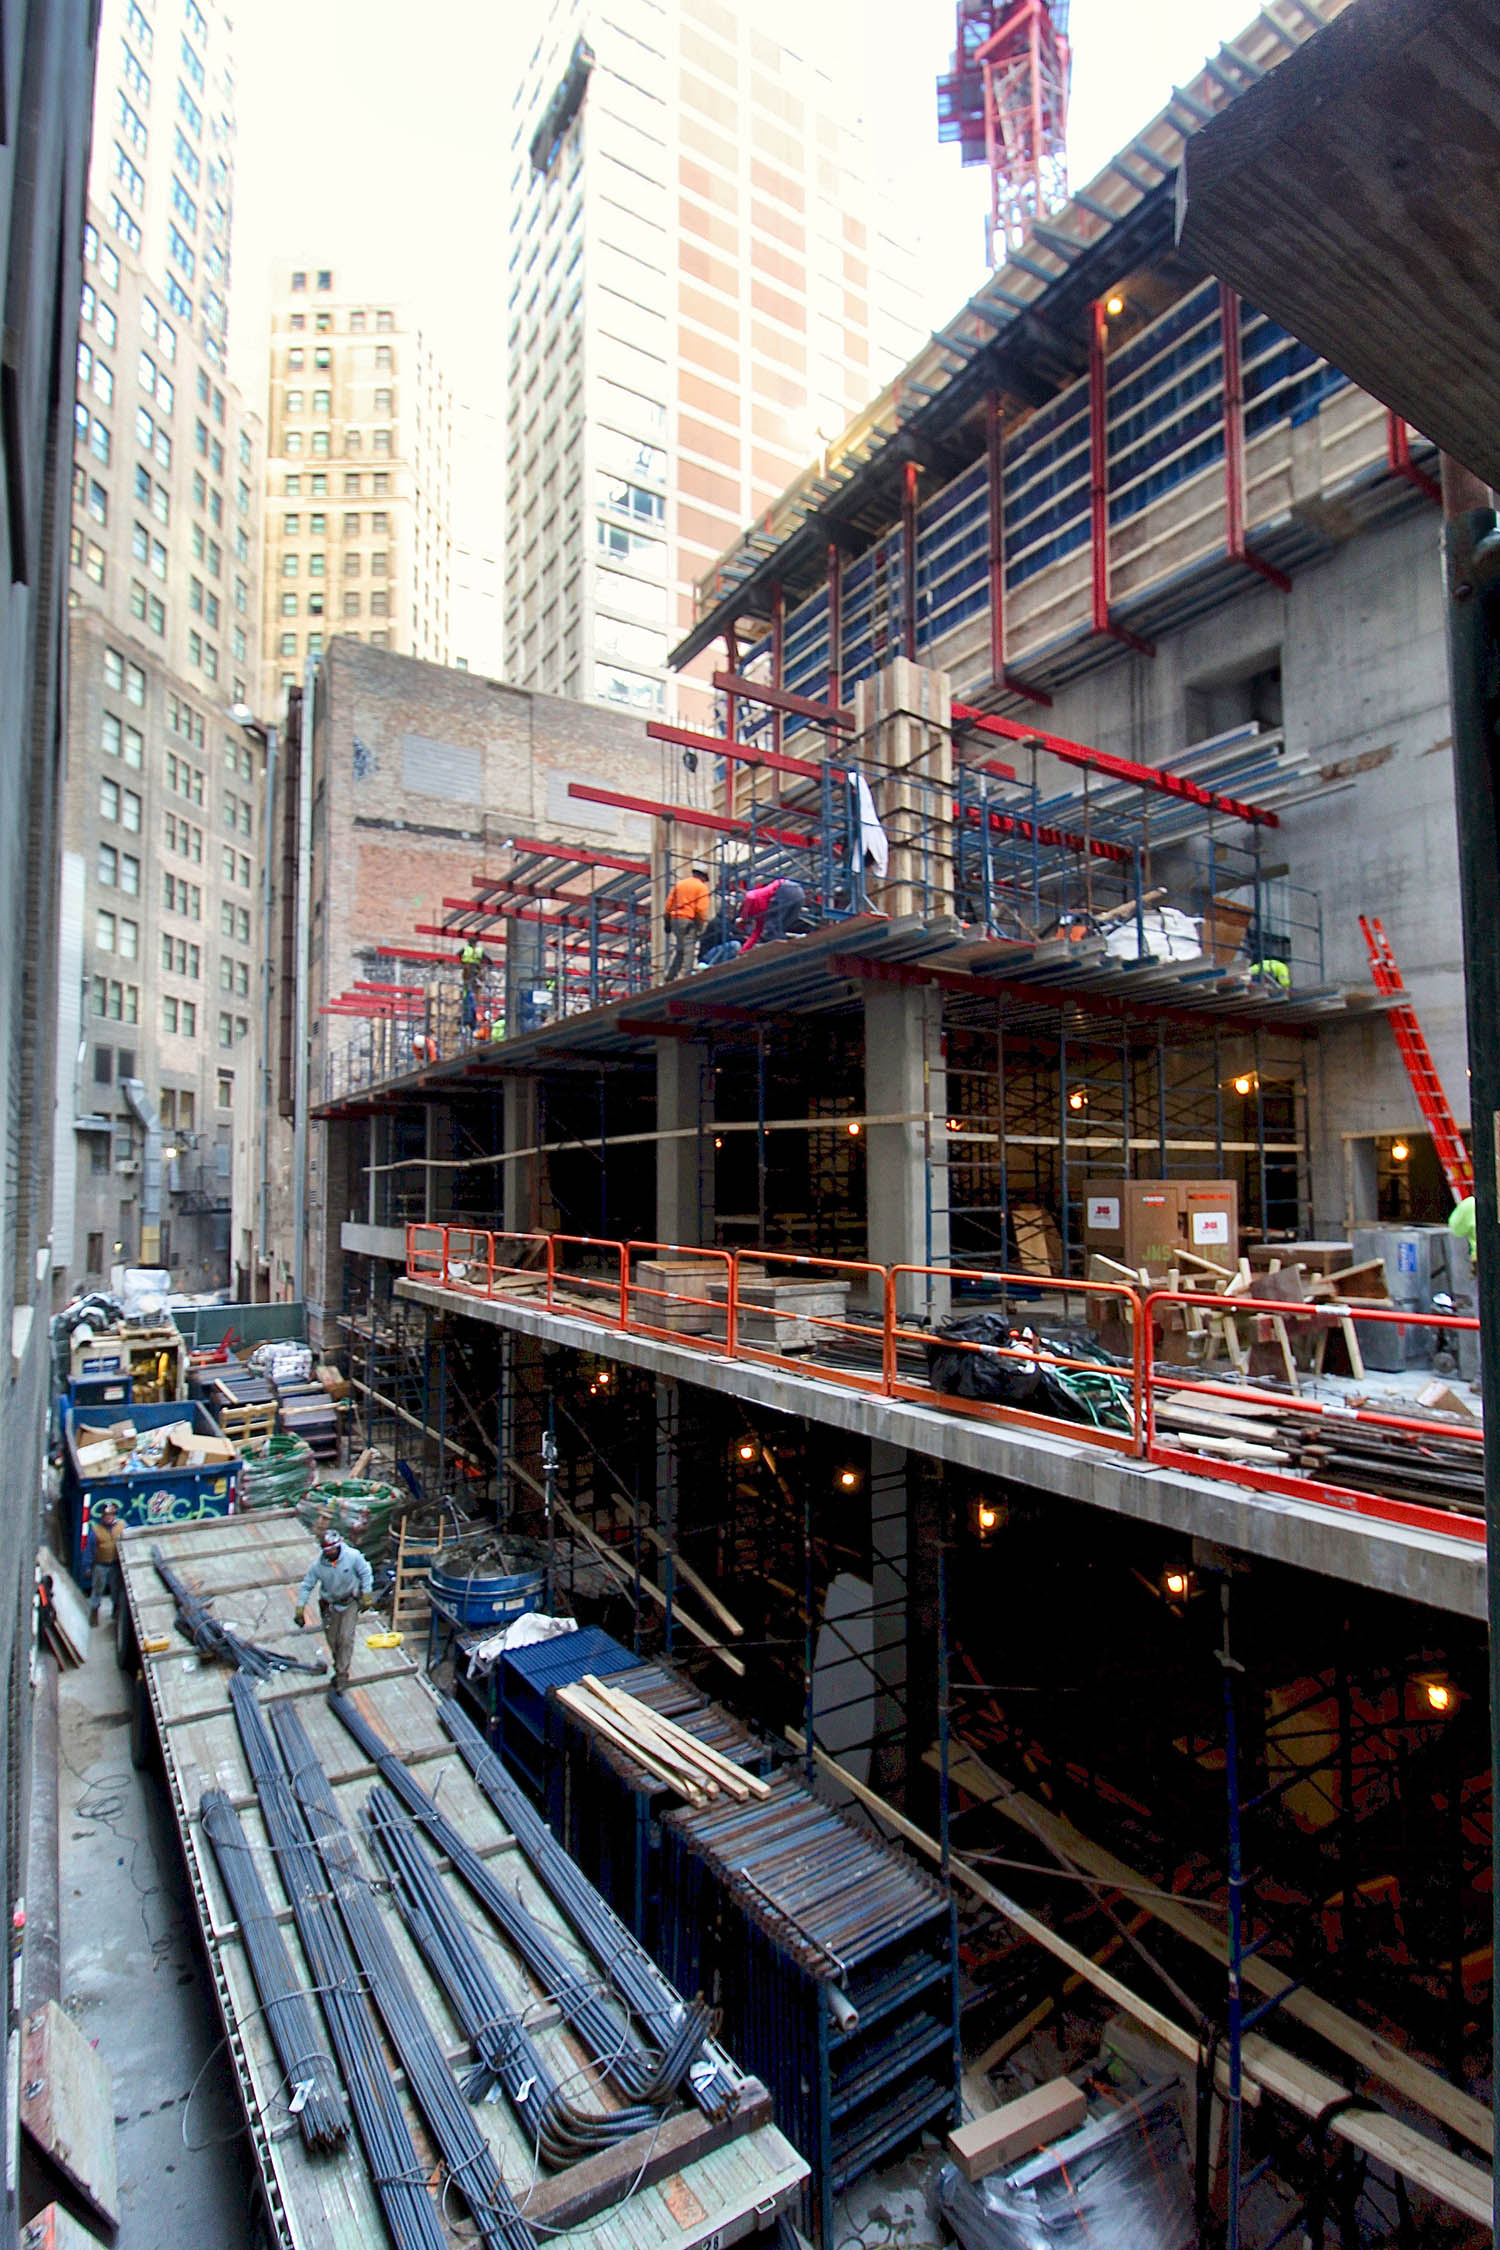 Construction Progress at 300 N Michigan Avenue. Image by Jack Crawford